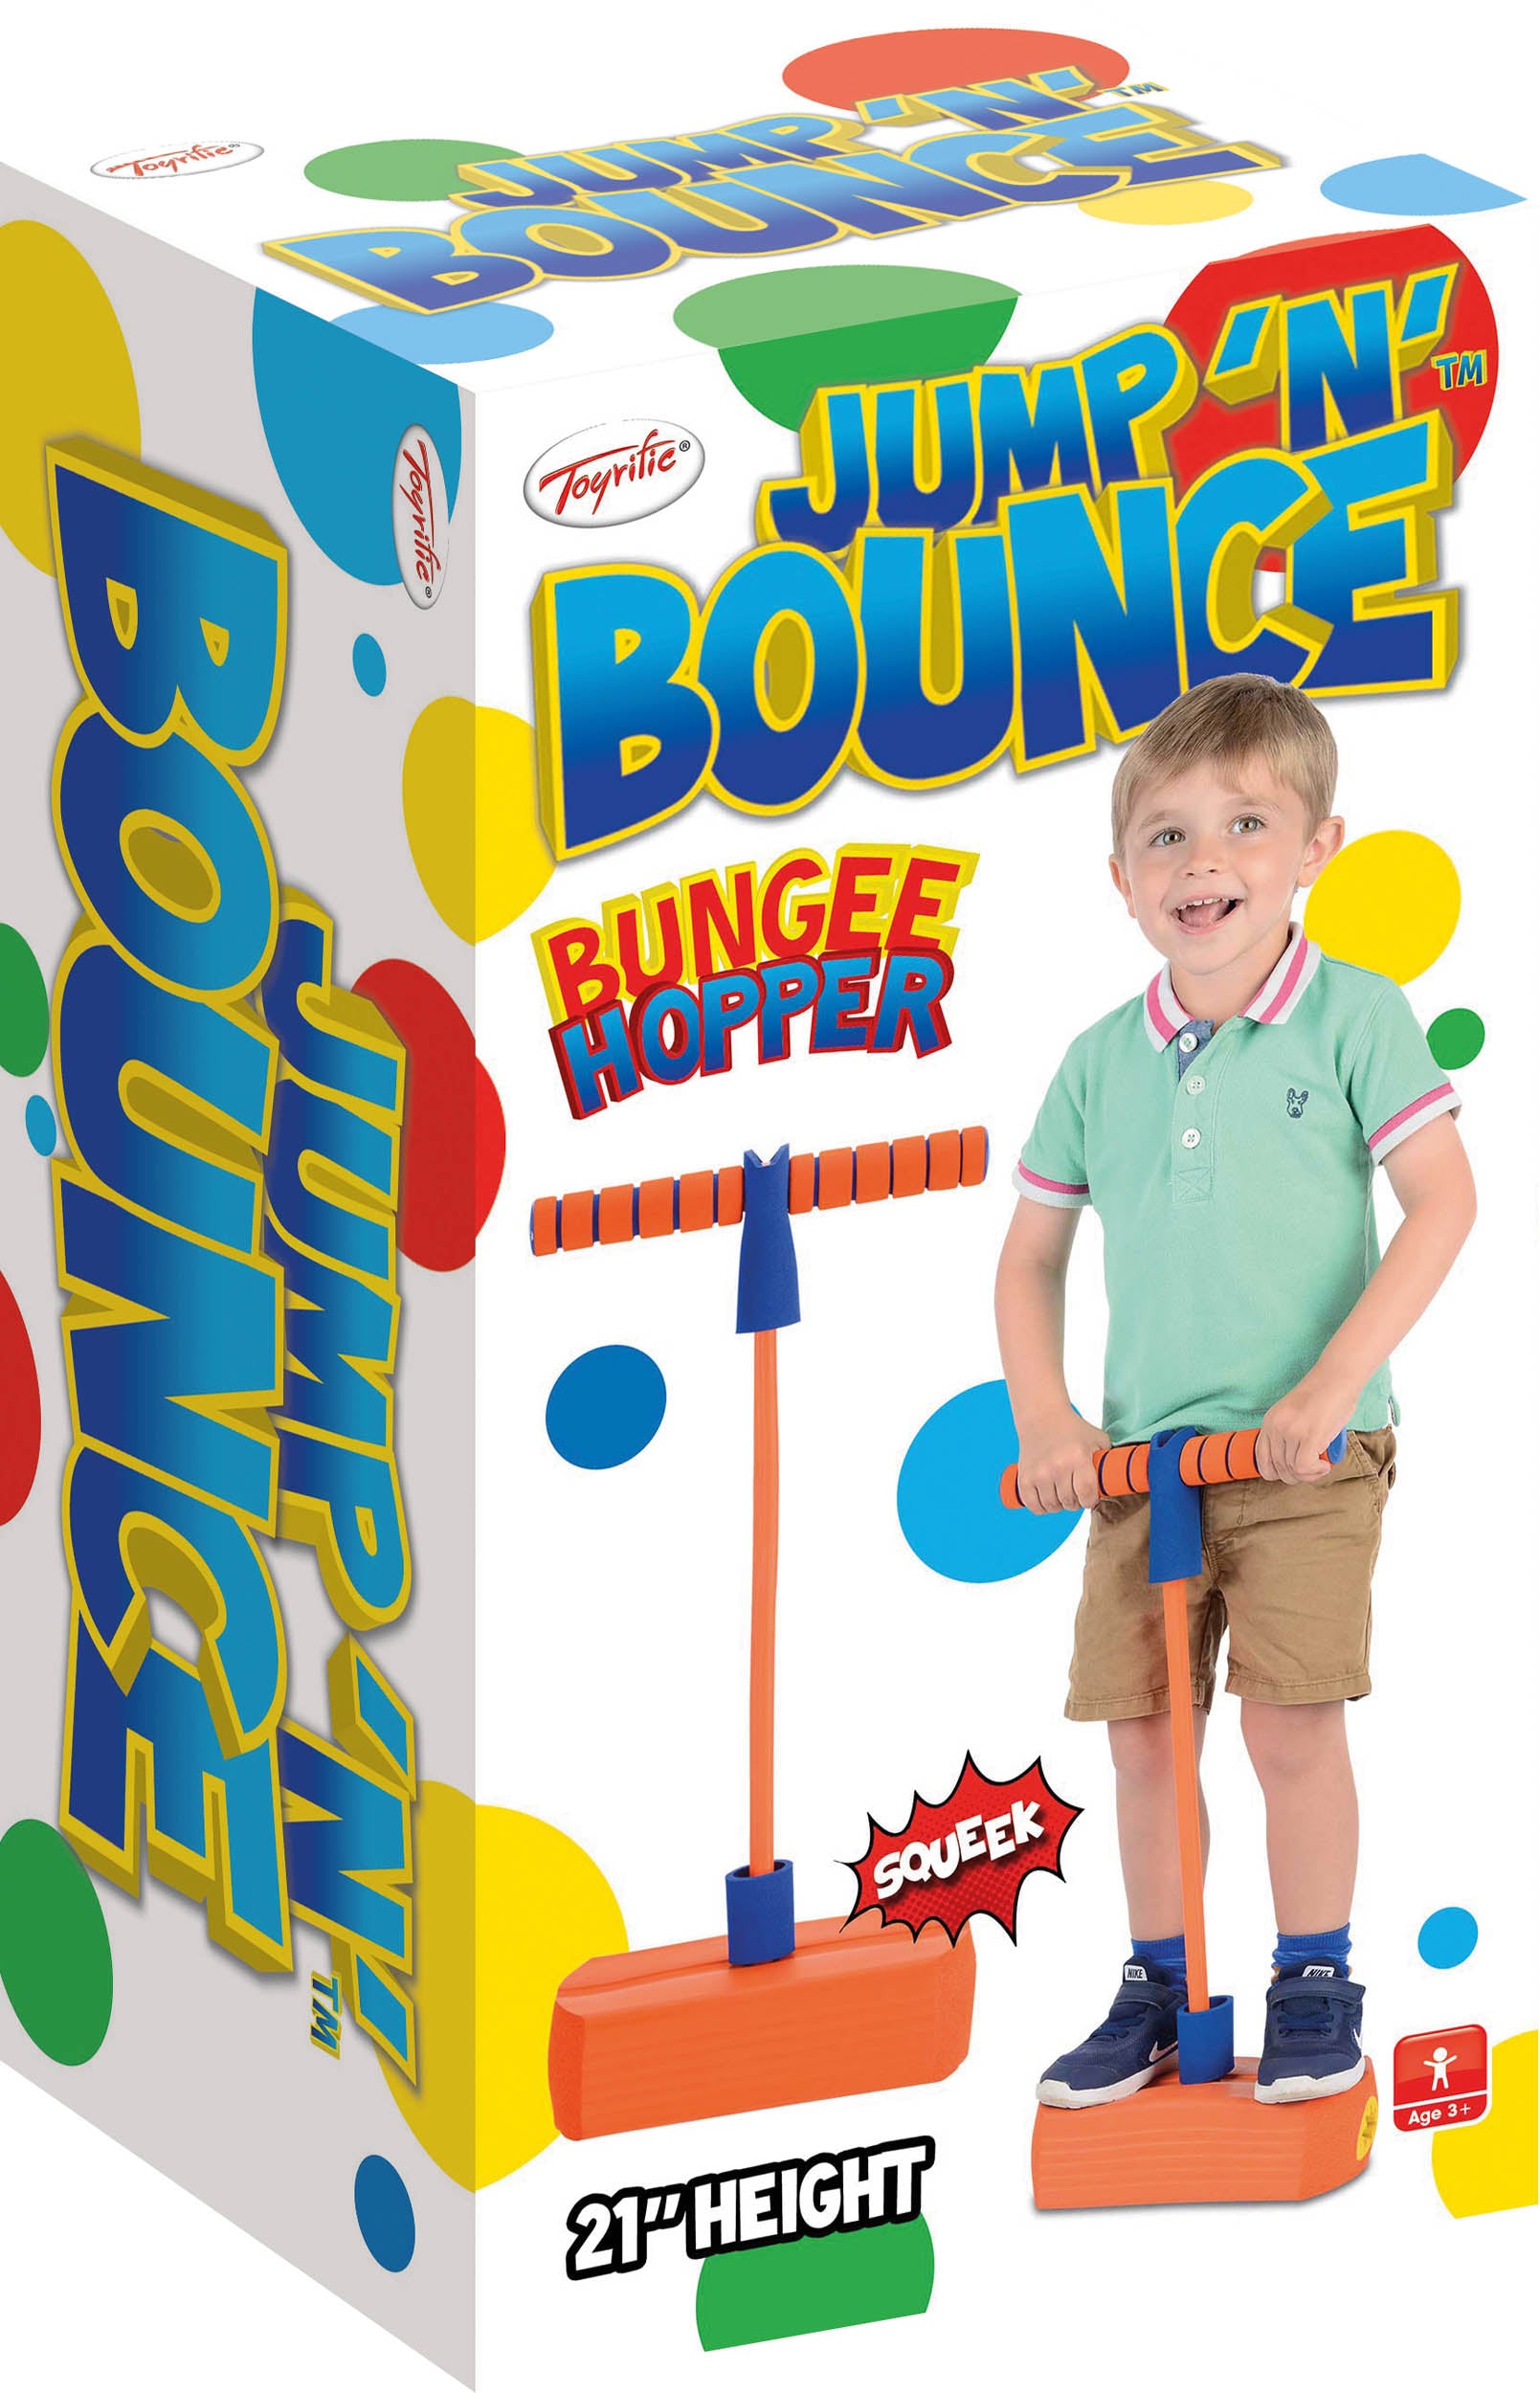 BUNGEE BOUNCER - Rich Kids Playground